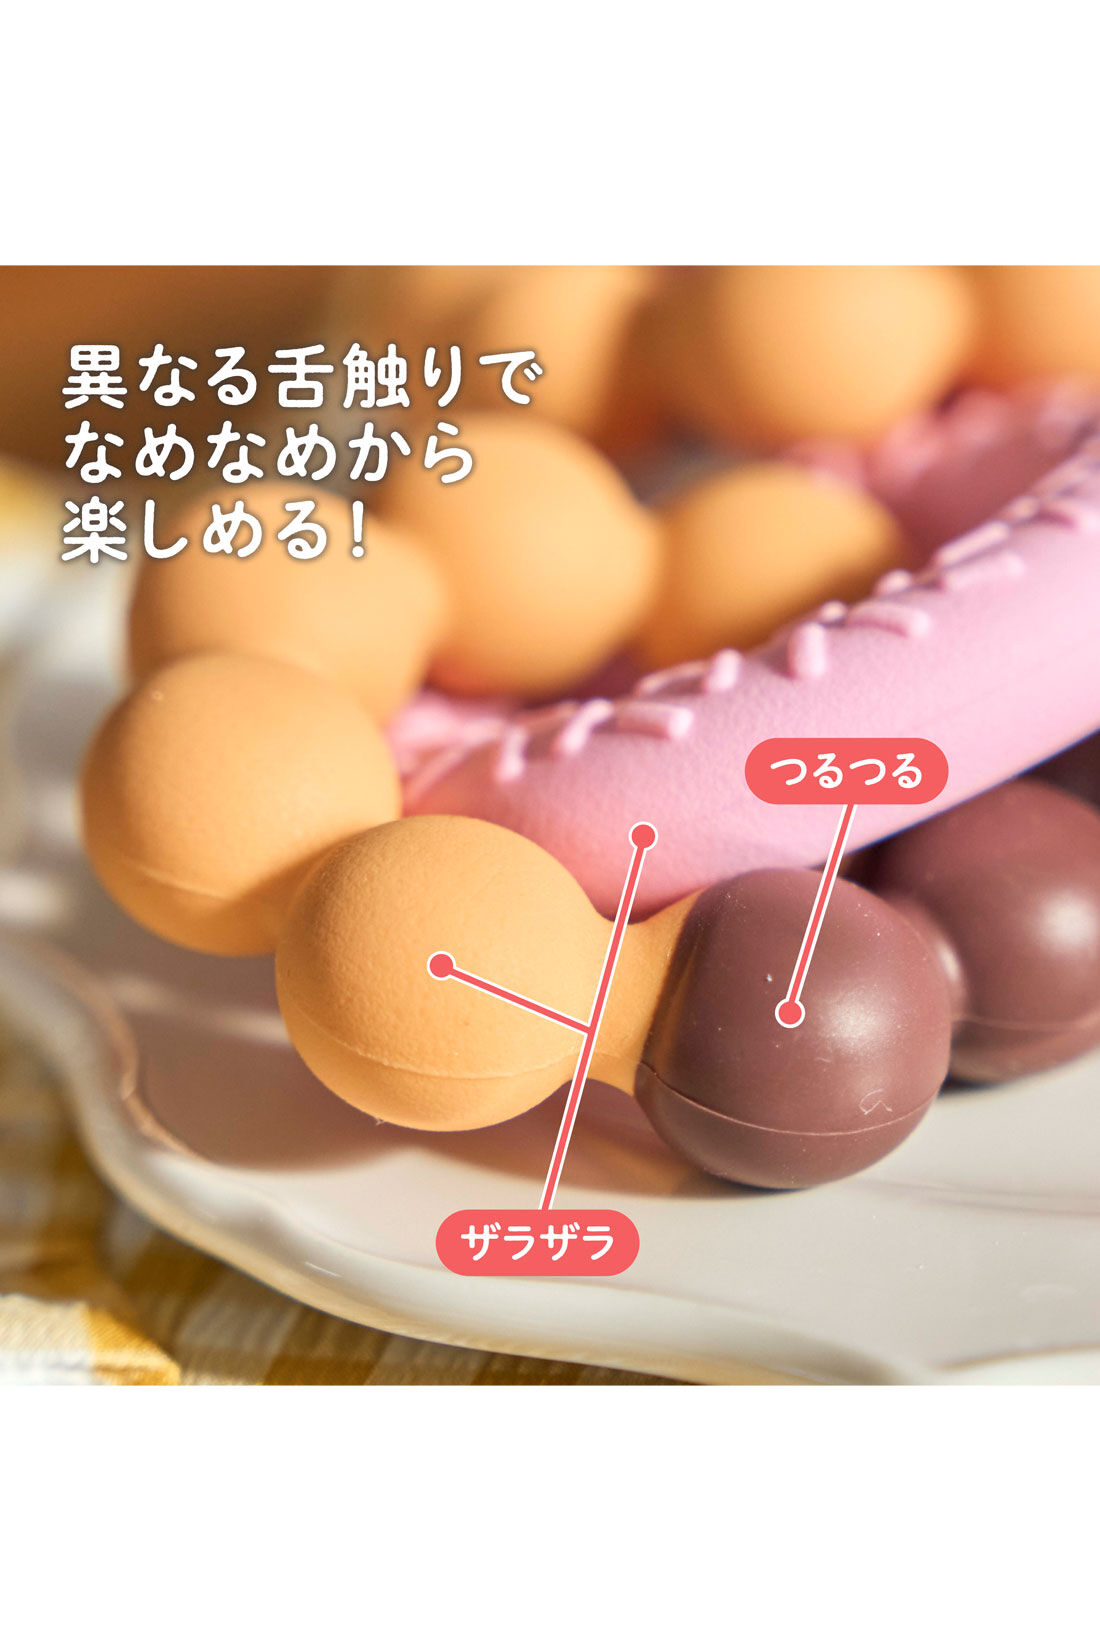 Mama select］EDISONmama カミカミBaby よくばりドーナツ｜おもちゃ